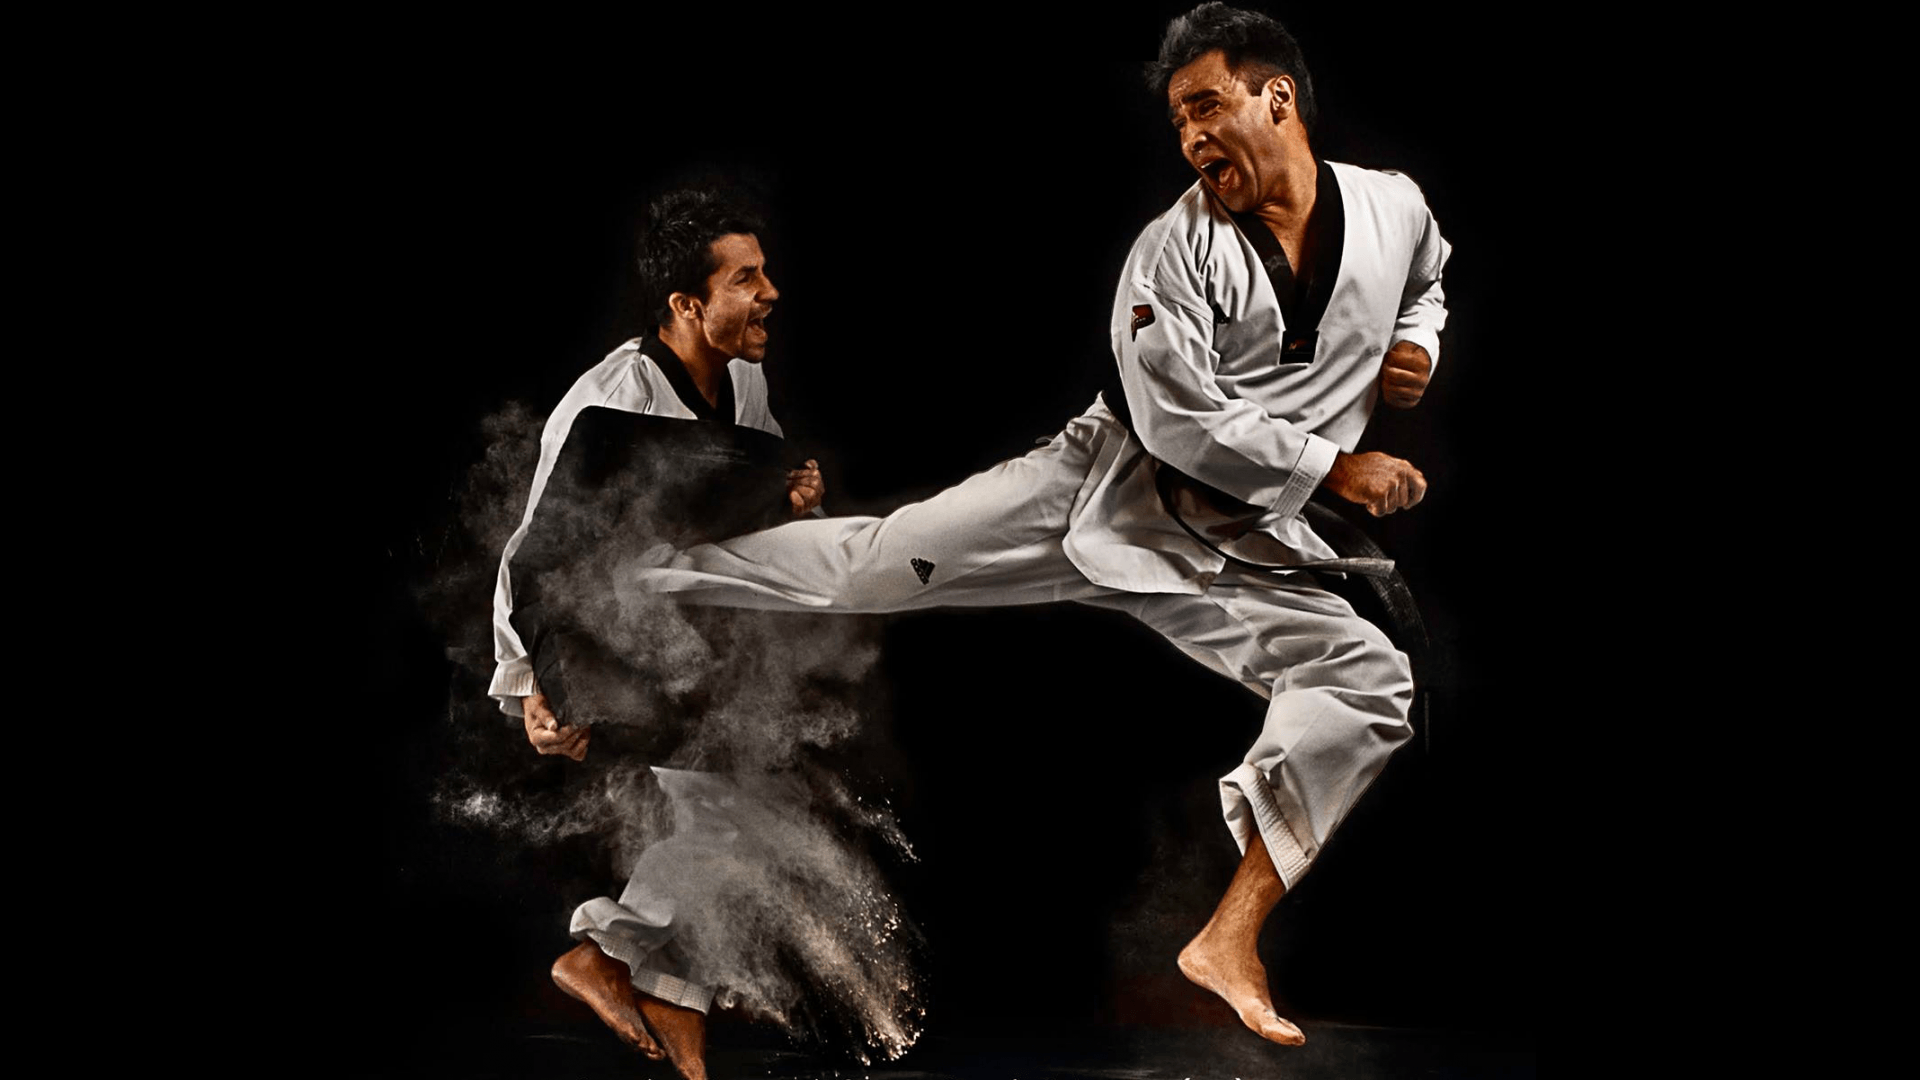 Authentic Taekwondo & Kickboxing - The Best of Martial Arts in Markham.